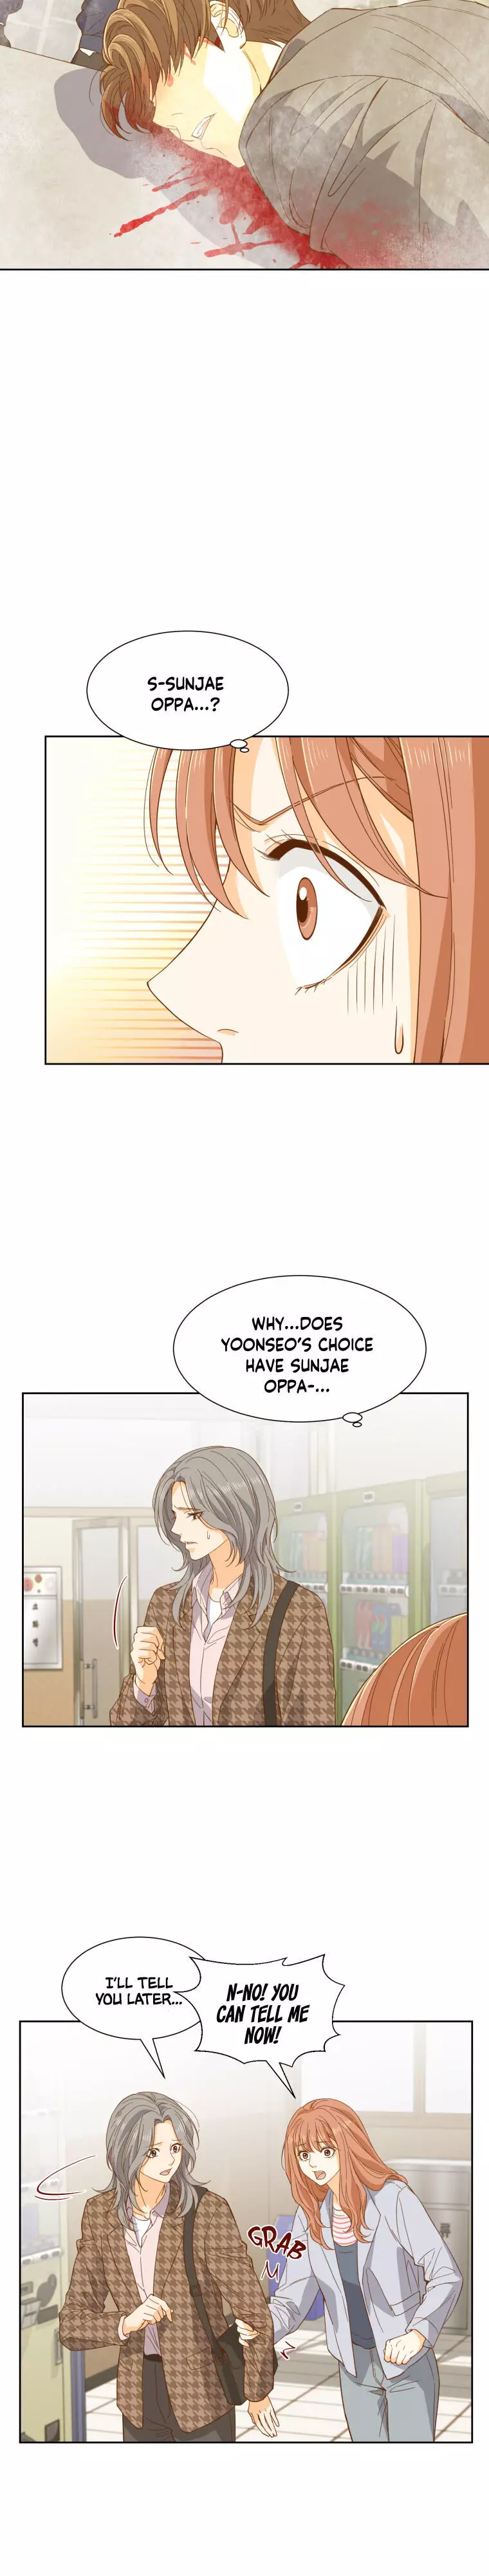 Hana’S Choice - 6 page 21